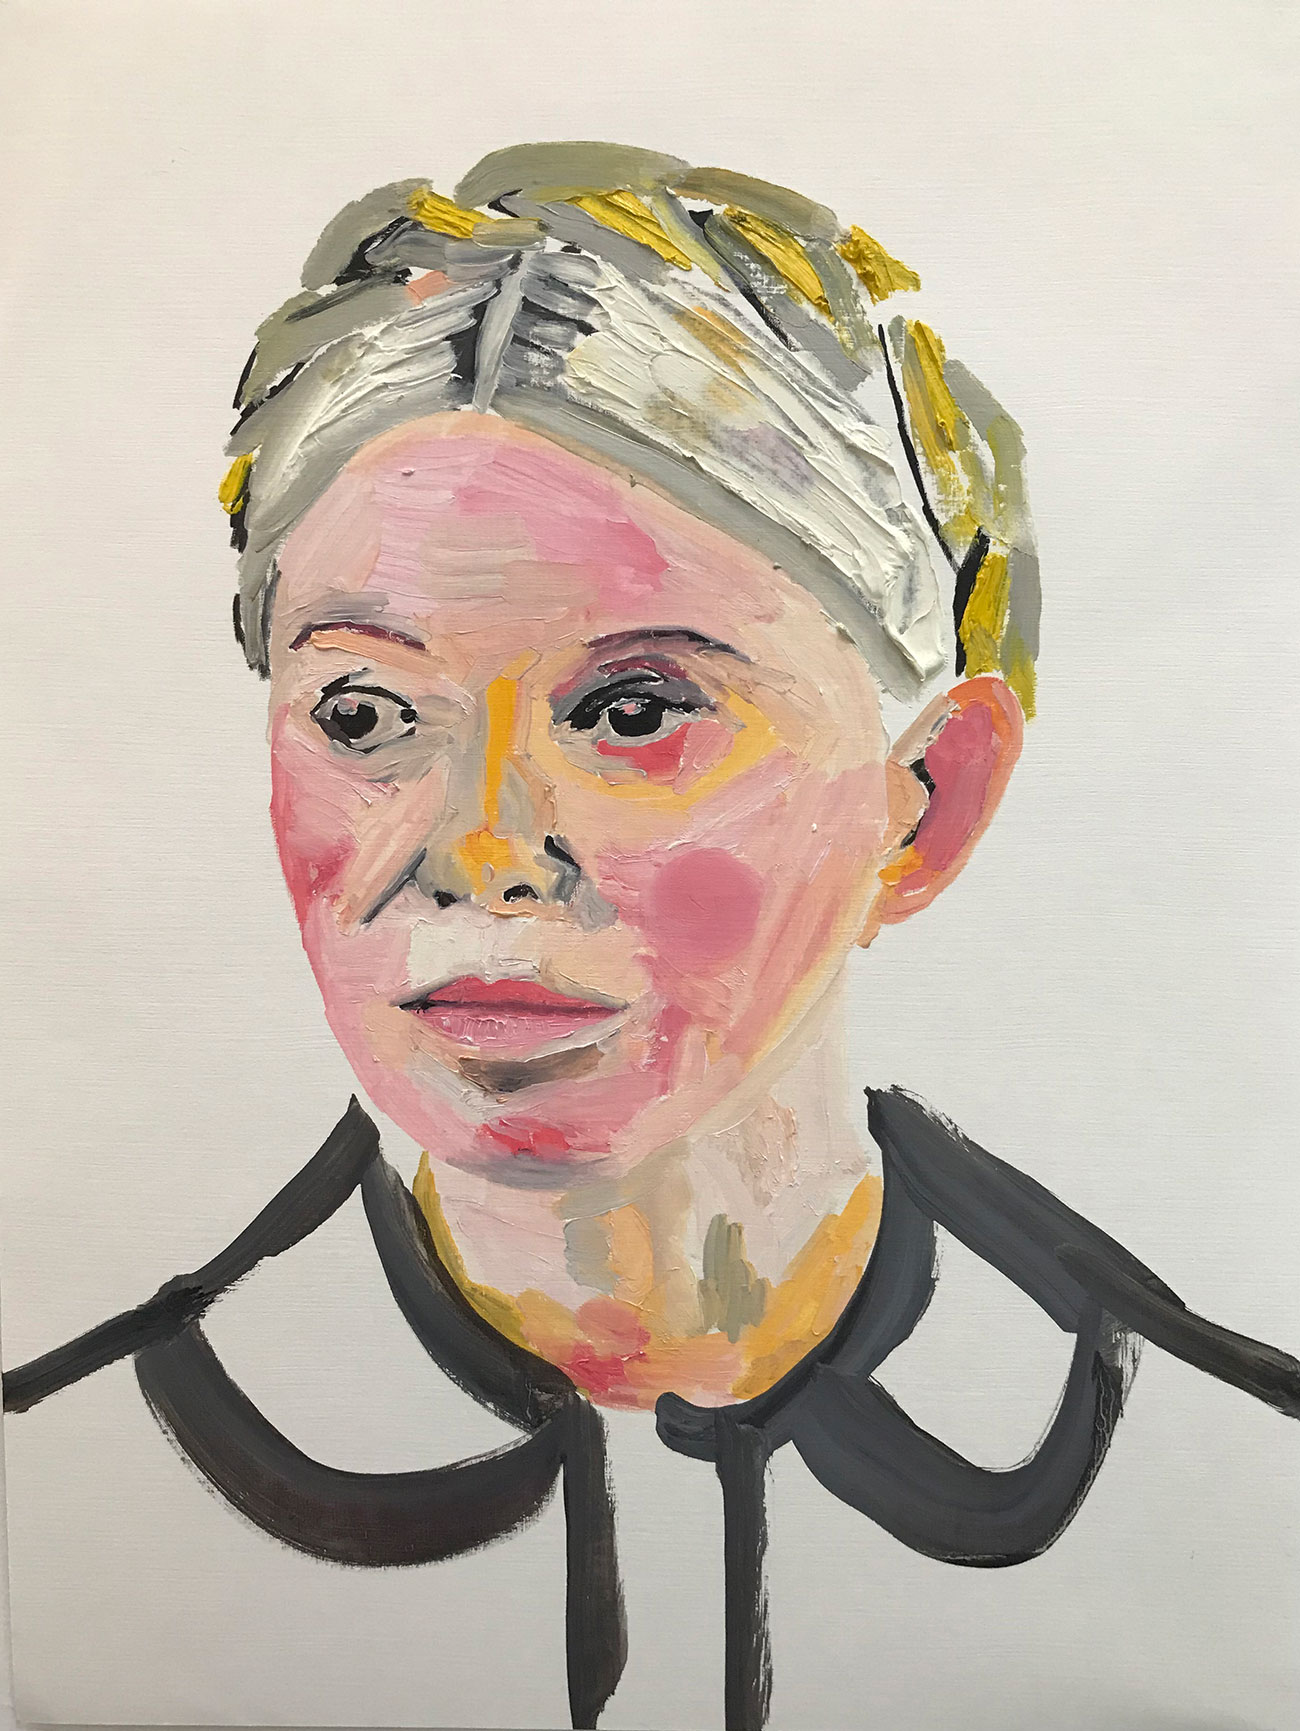 Yulia Tymoshenko, 2017 - Oil on paper 36 x 48 cms